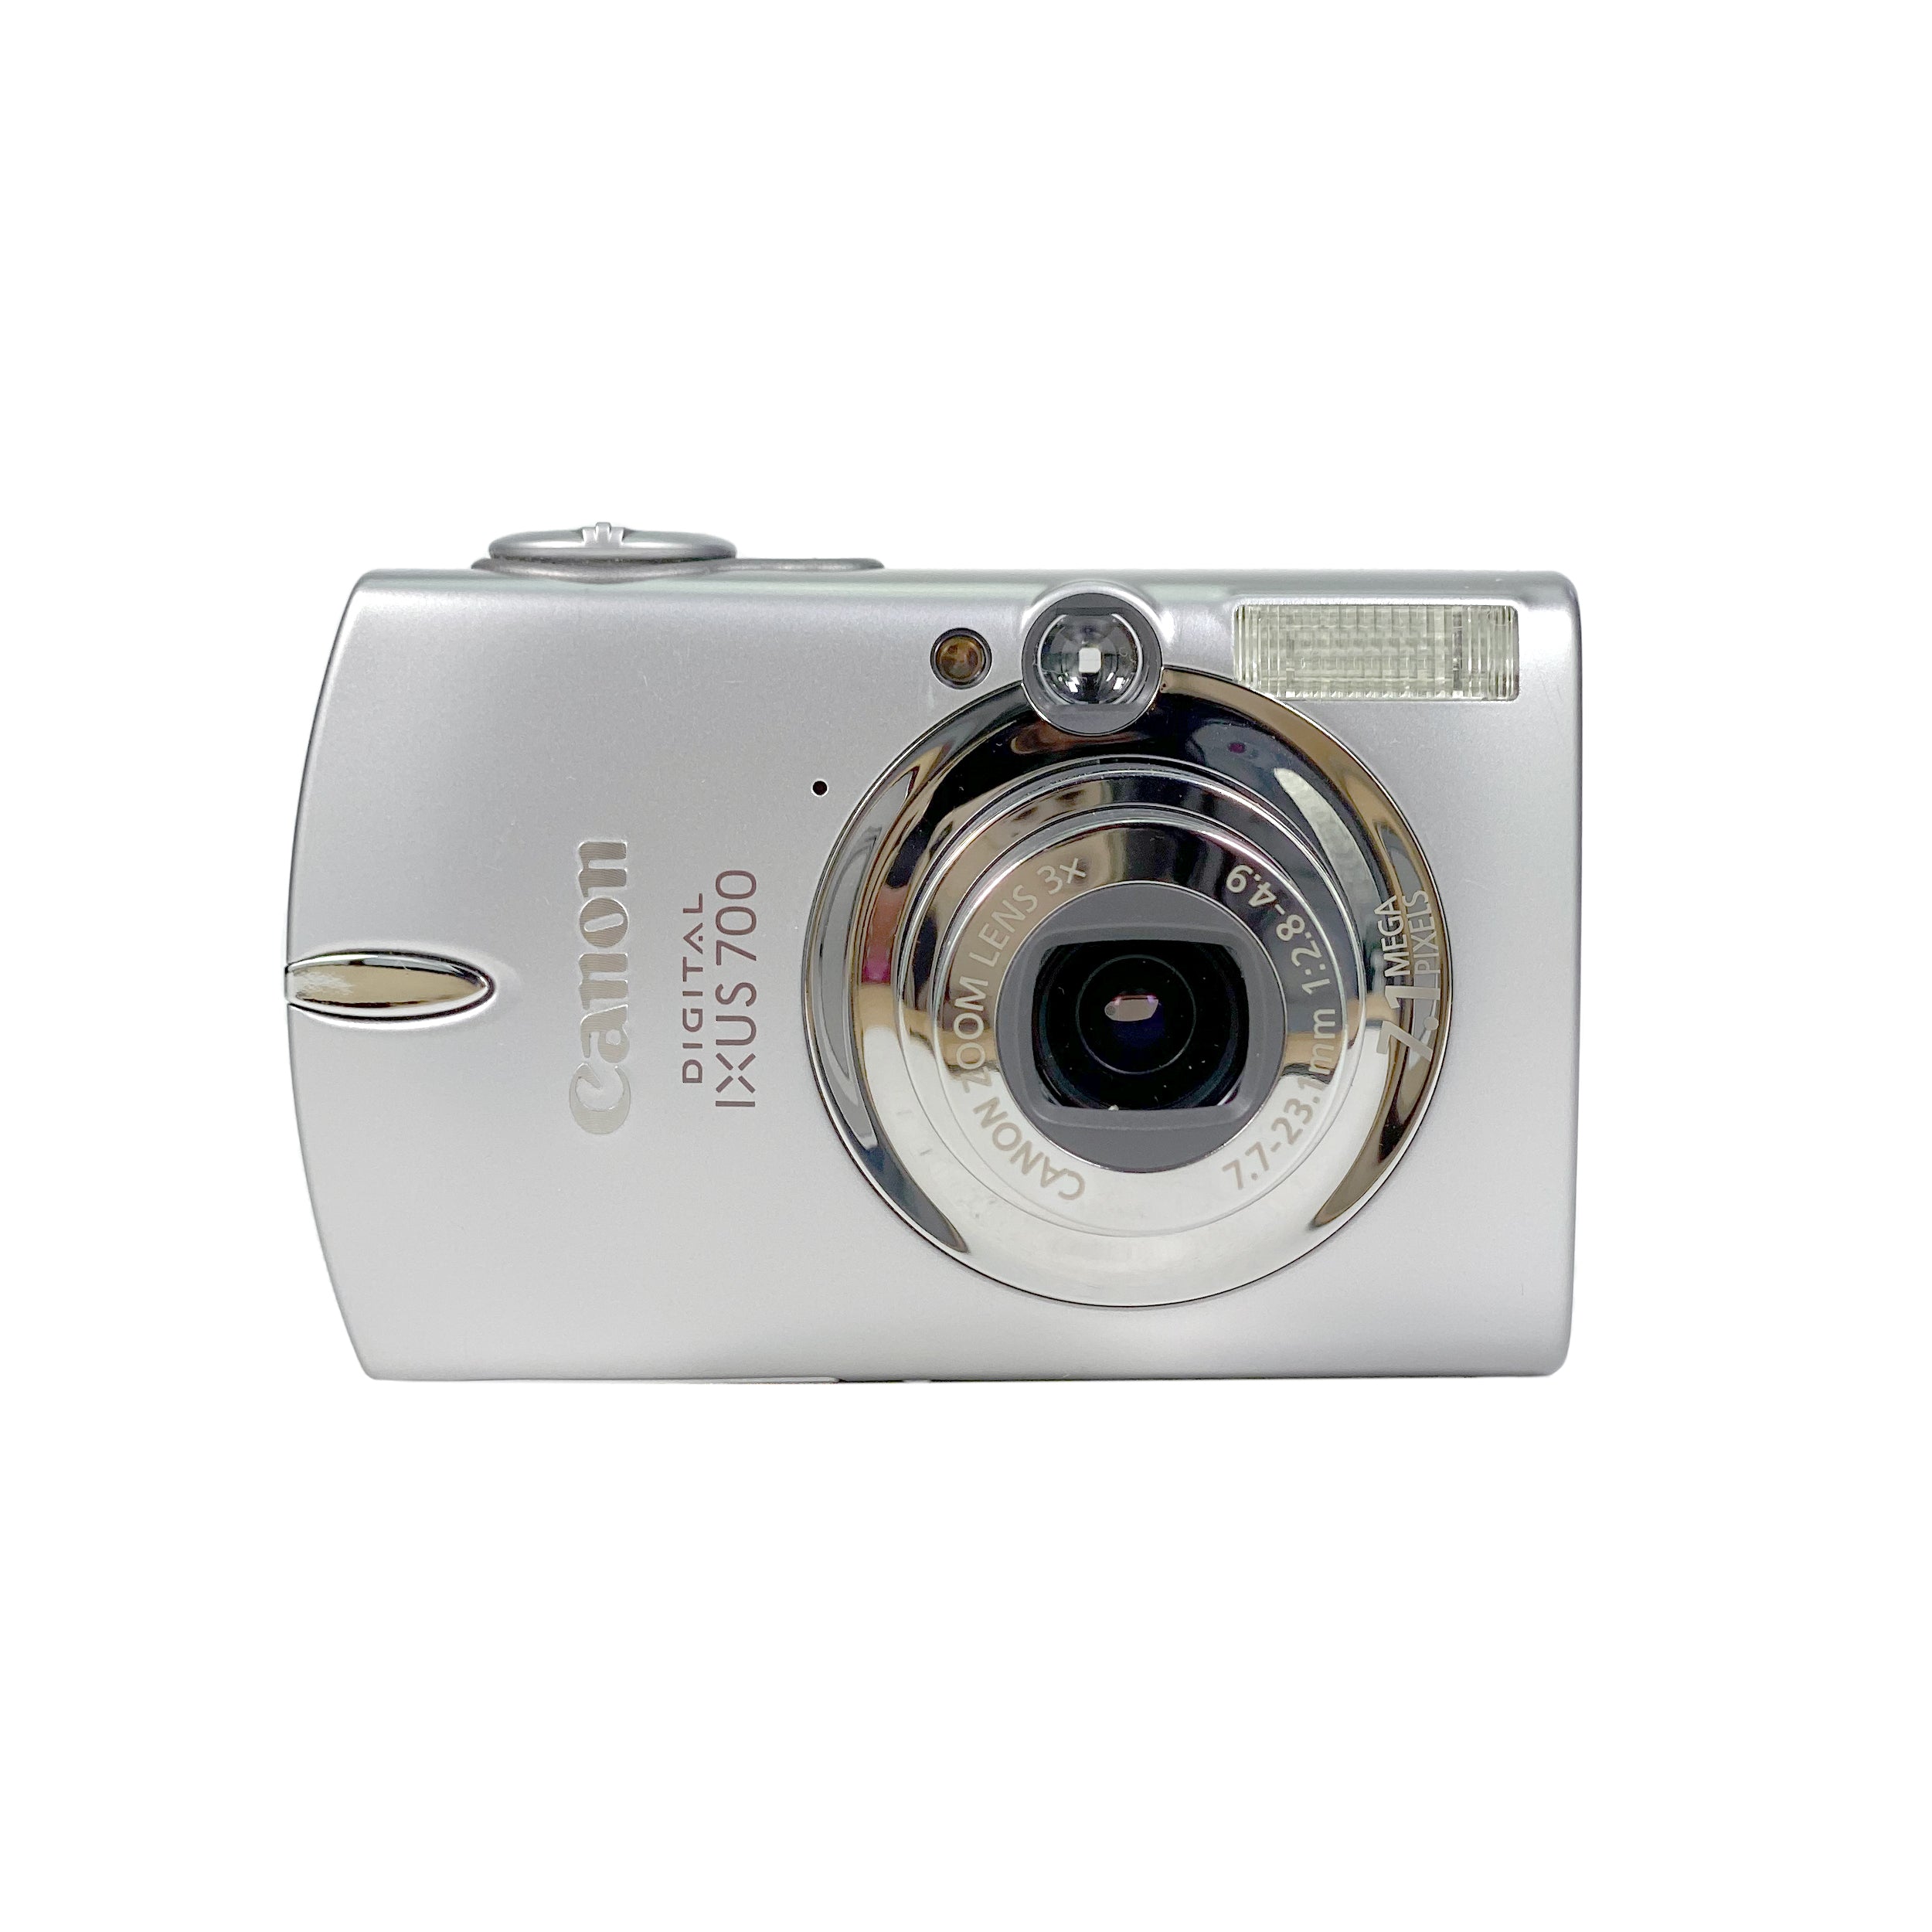 Canon IXUS 700 IS Digital Compact